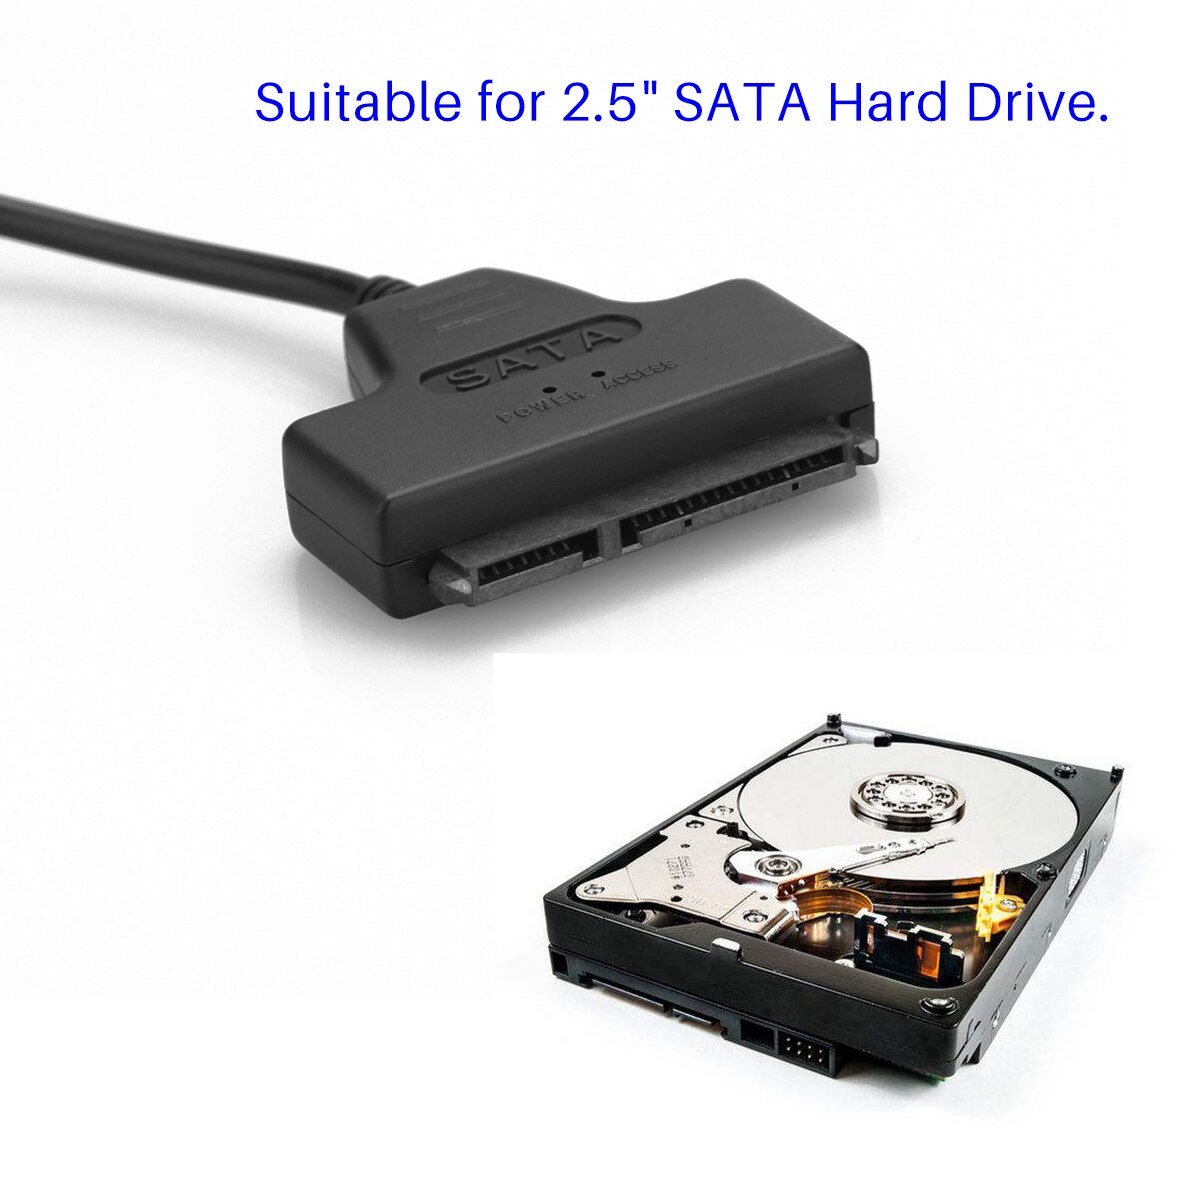 FORNORM 2.0 Adapter Kabel Dubbele USB Adapter Kabel voor 2.5 "SATA Hard Drive USB 3.0 SATA 15 + 7 pin naar USB